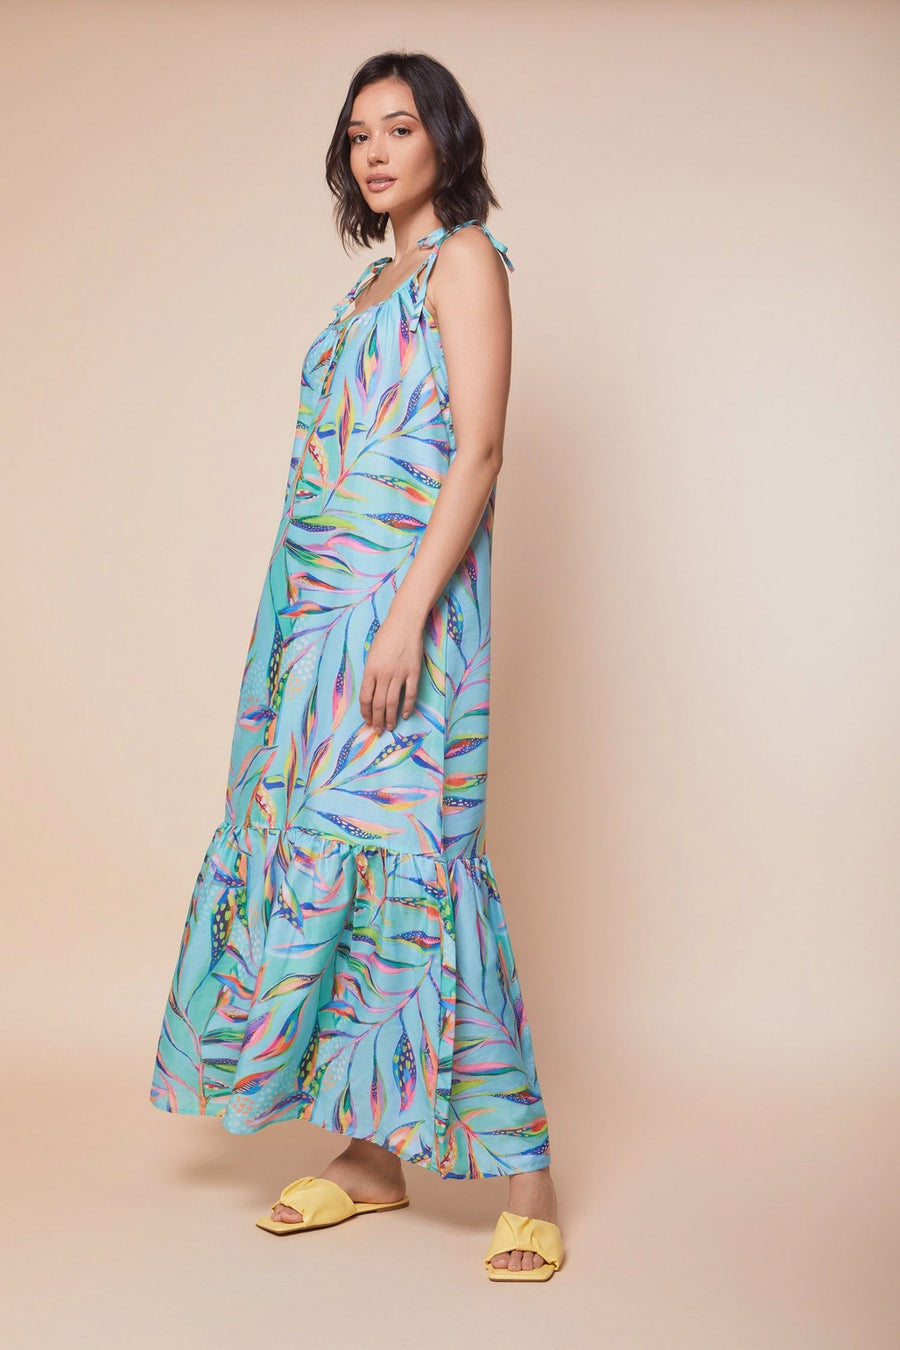 Mint Leaves print Dress - nahlaelalfydesigns